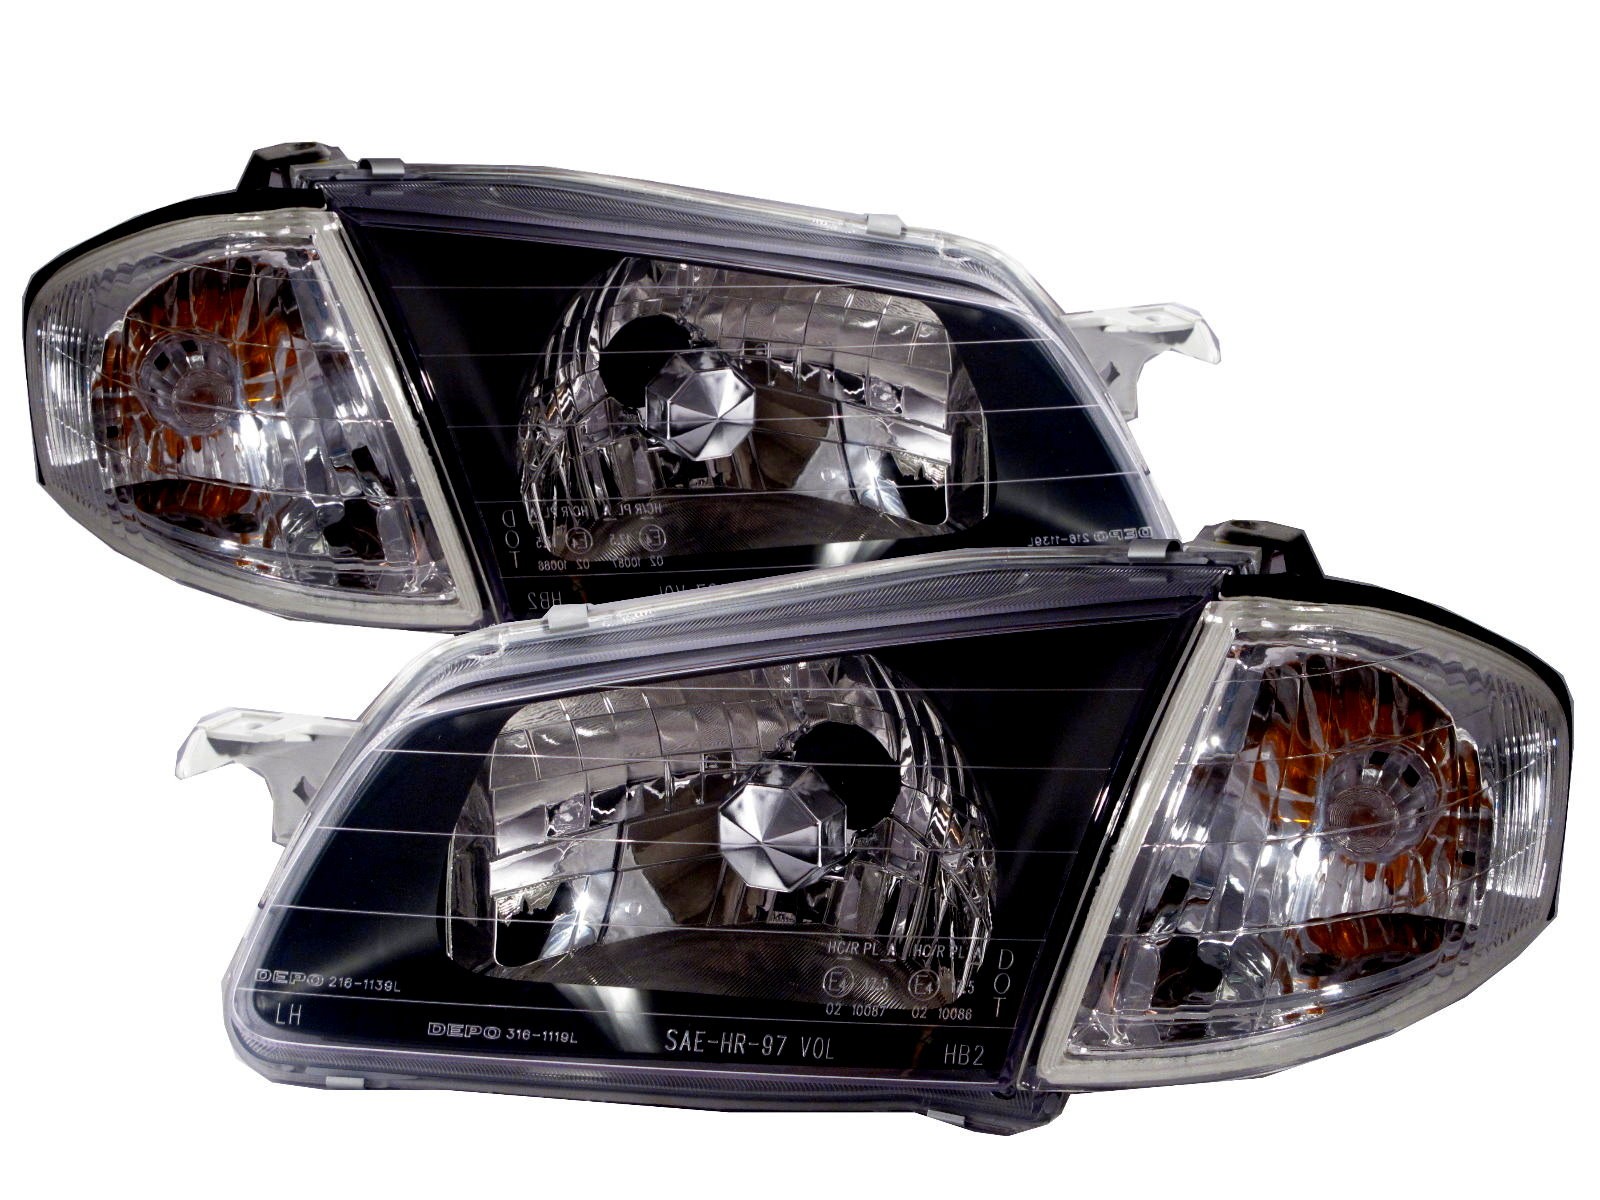 CrazyTheGod IsamuGenki BJ 1998-2000 Sedan/Wagon Clear Headlight Headlamp BLACK V1 for MAZDA LHD